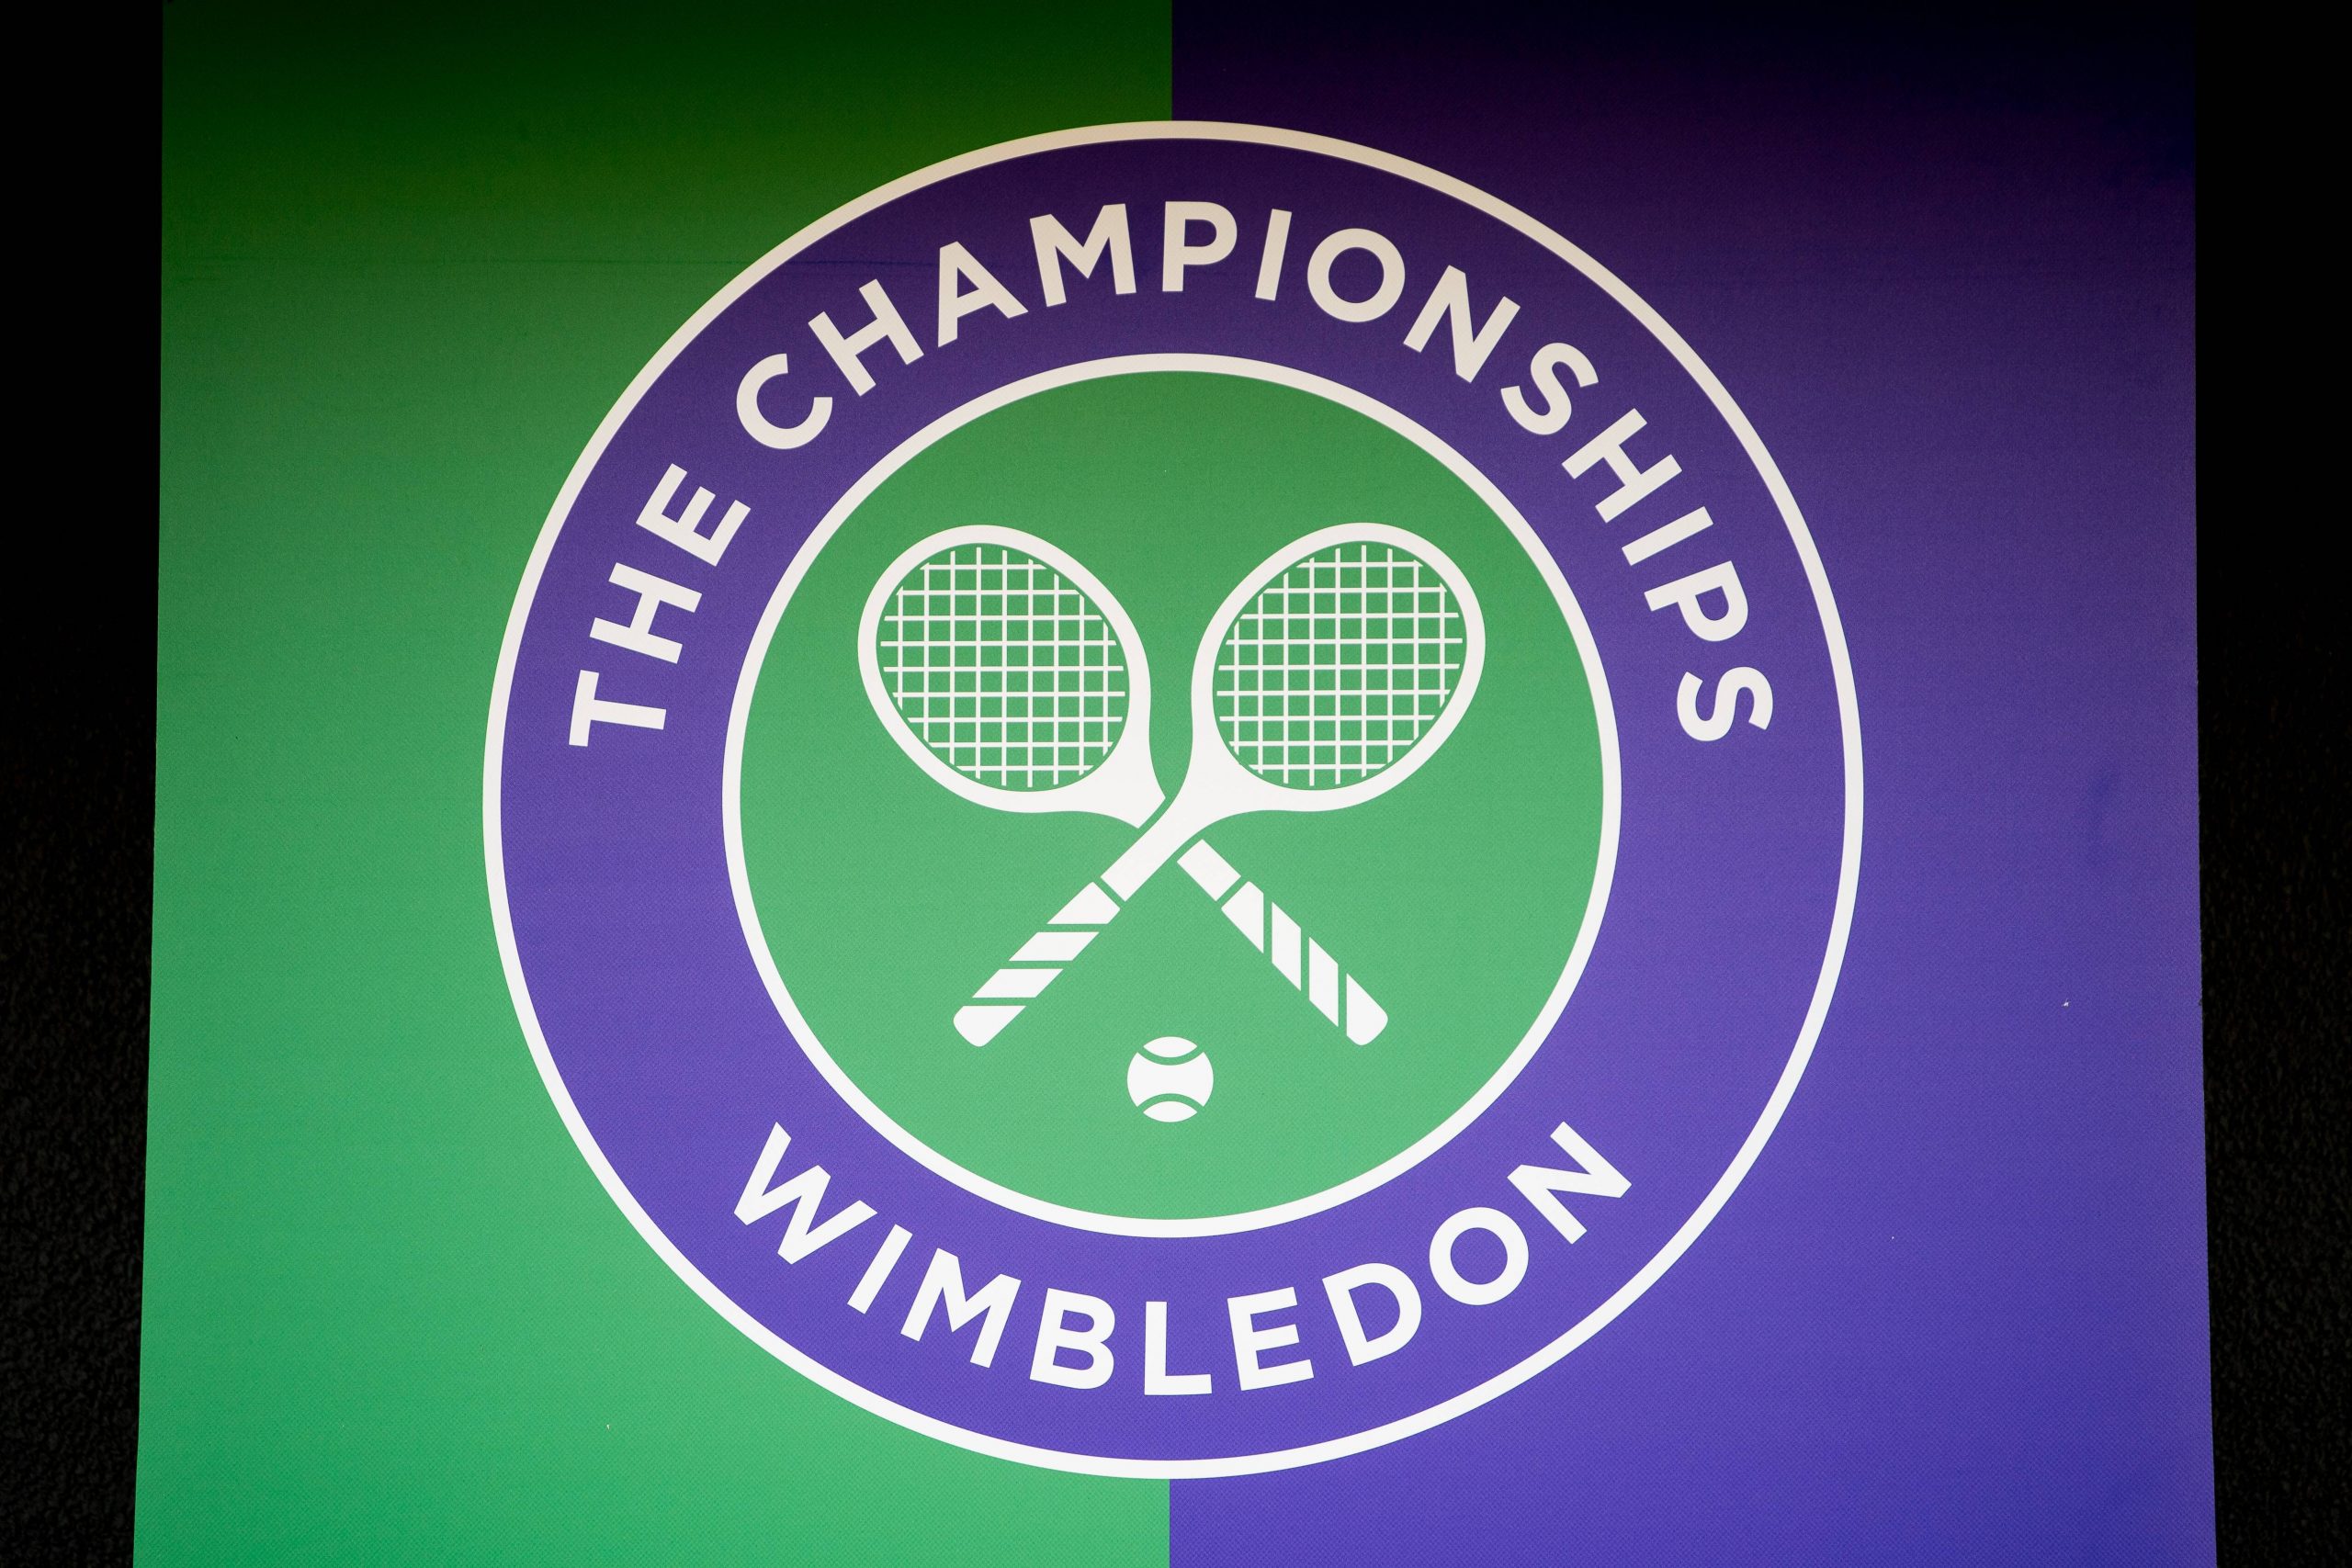 Breakdown money 2021 wimbledon prize Wimbledon 2021